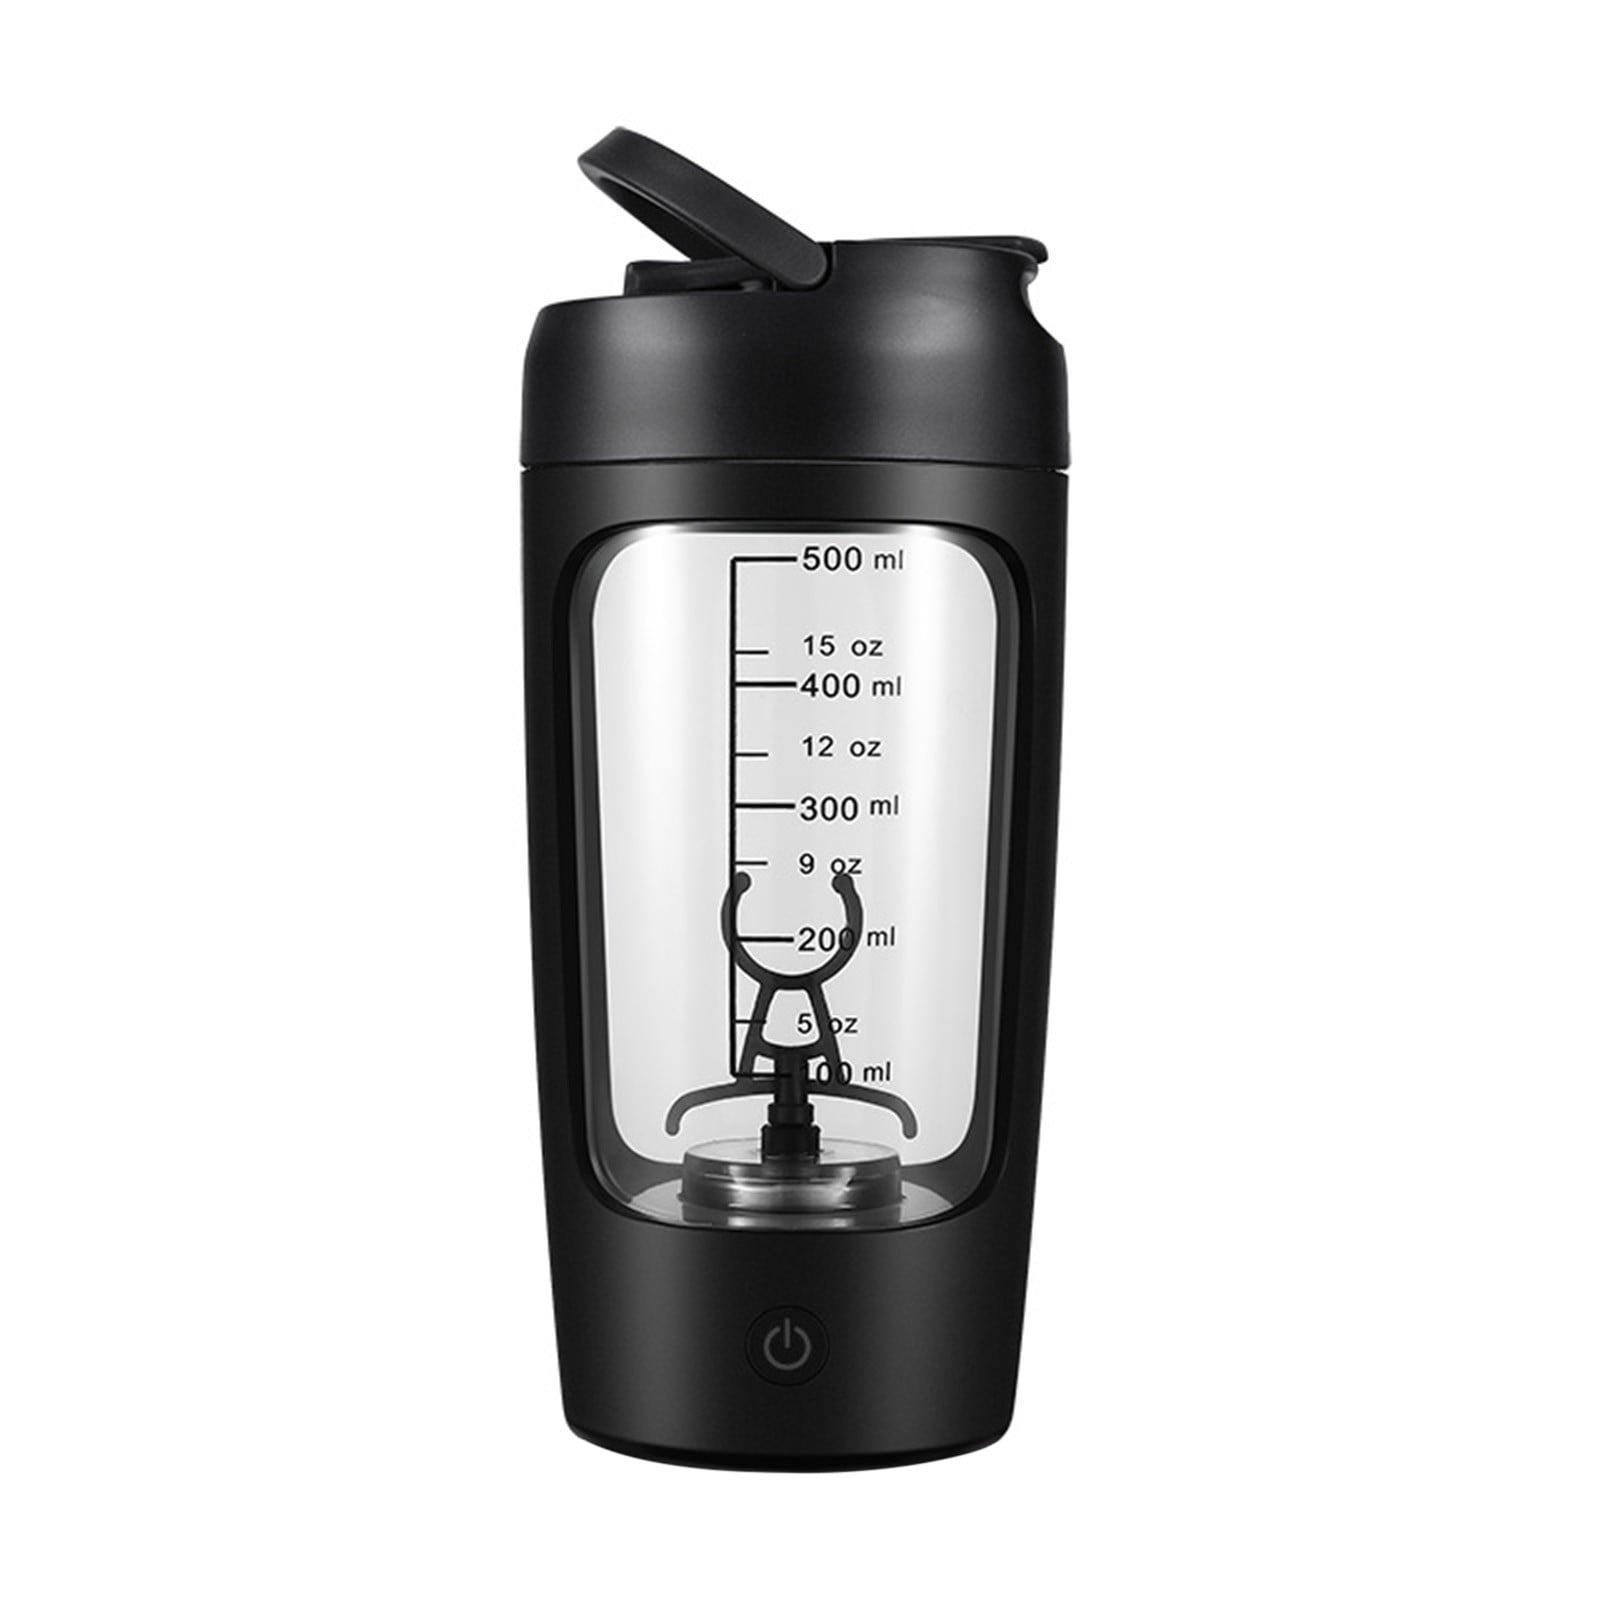 Tuphregyow Shaker Bottle,Electric Protein Shaker Bottle,500ml Bottle Blend-er for Protein Shakes for Protein Mixes, Size: 8.7